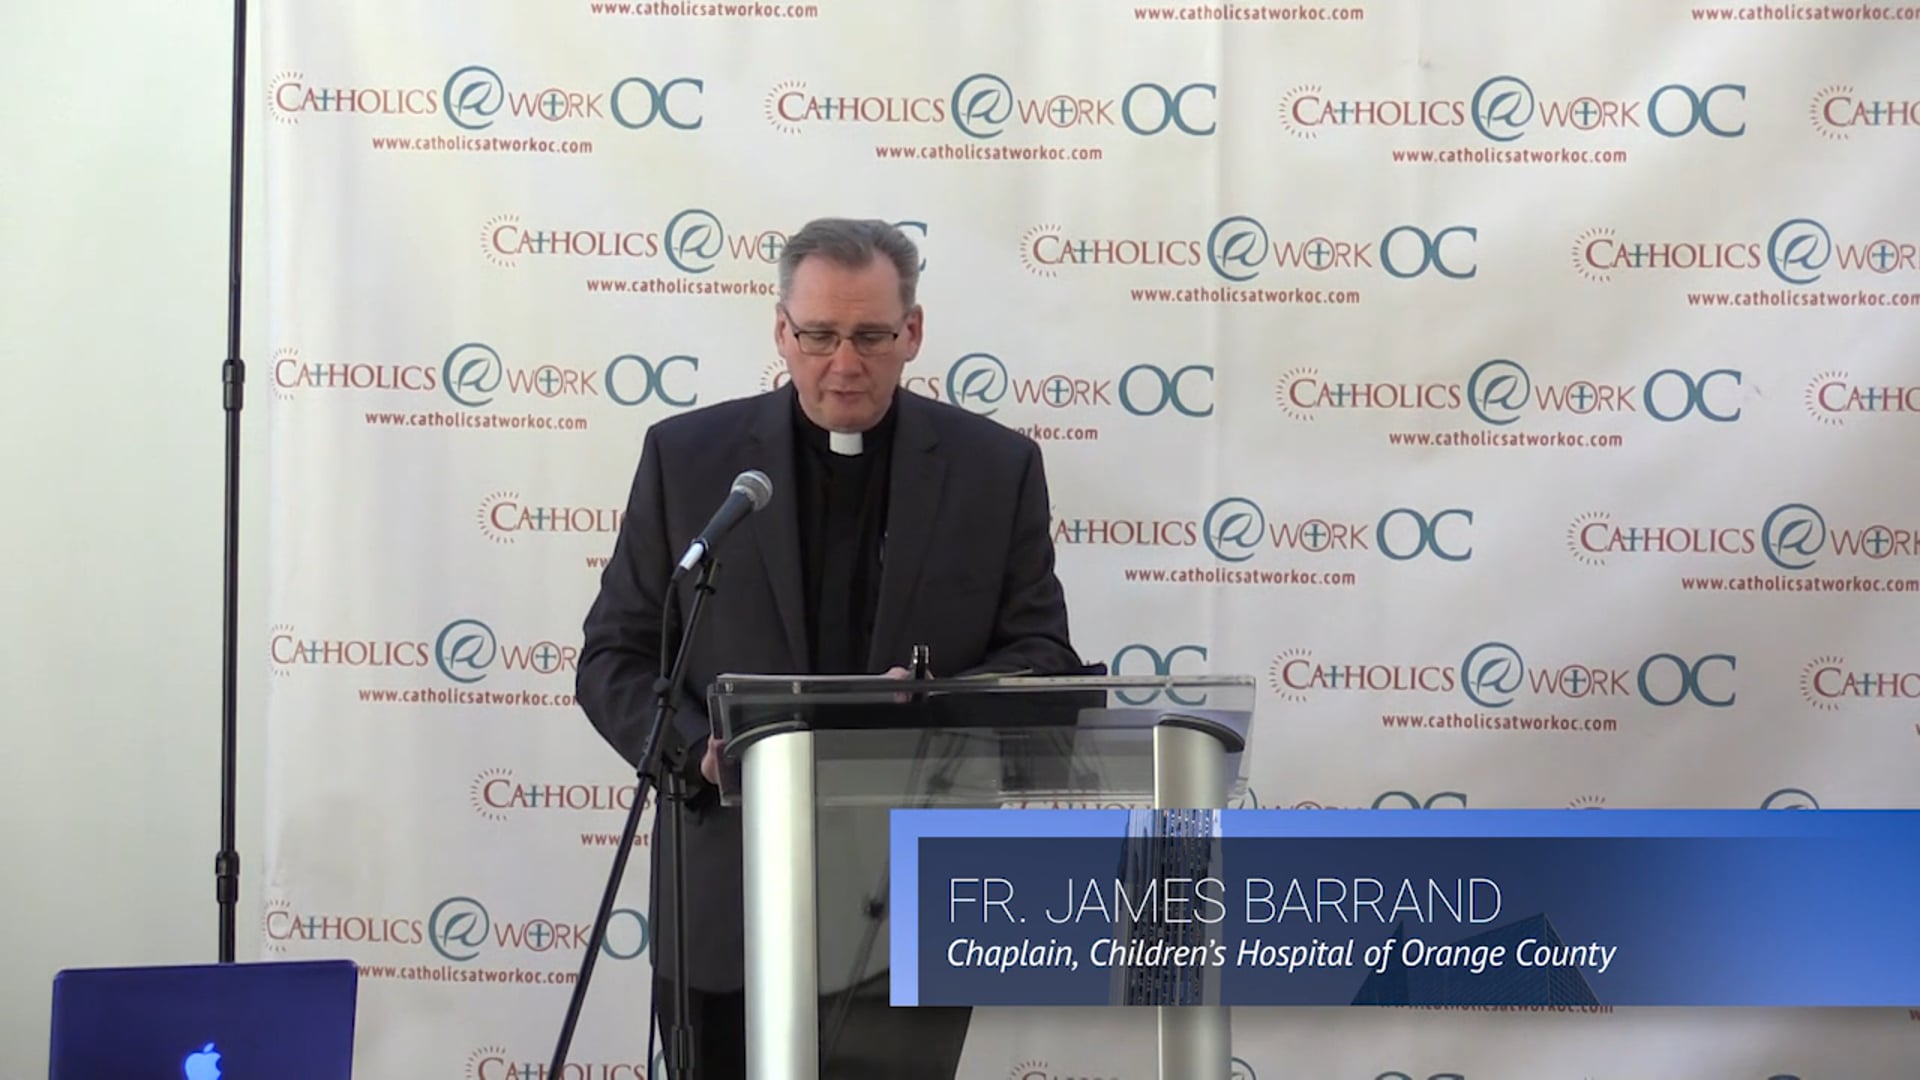 Fr. James Barrand: "Visit the Sick"